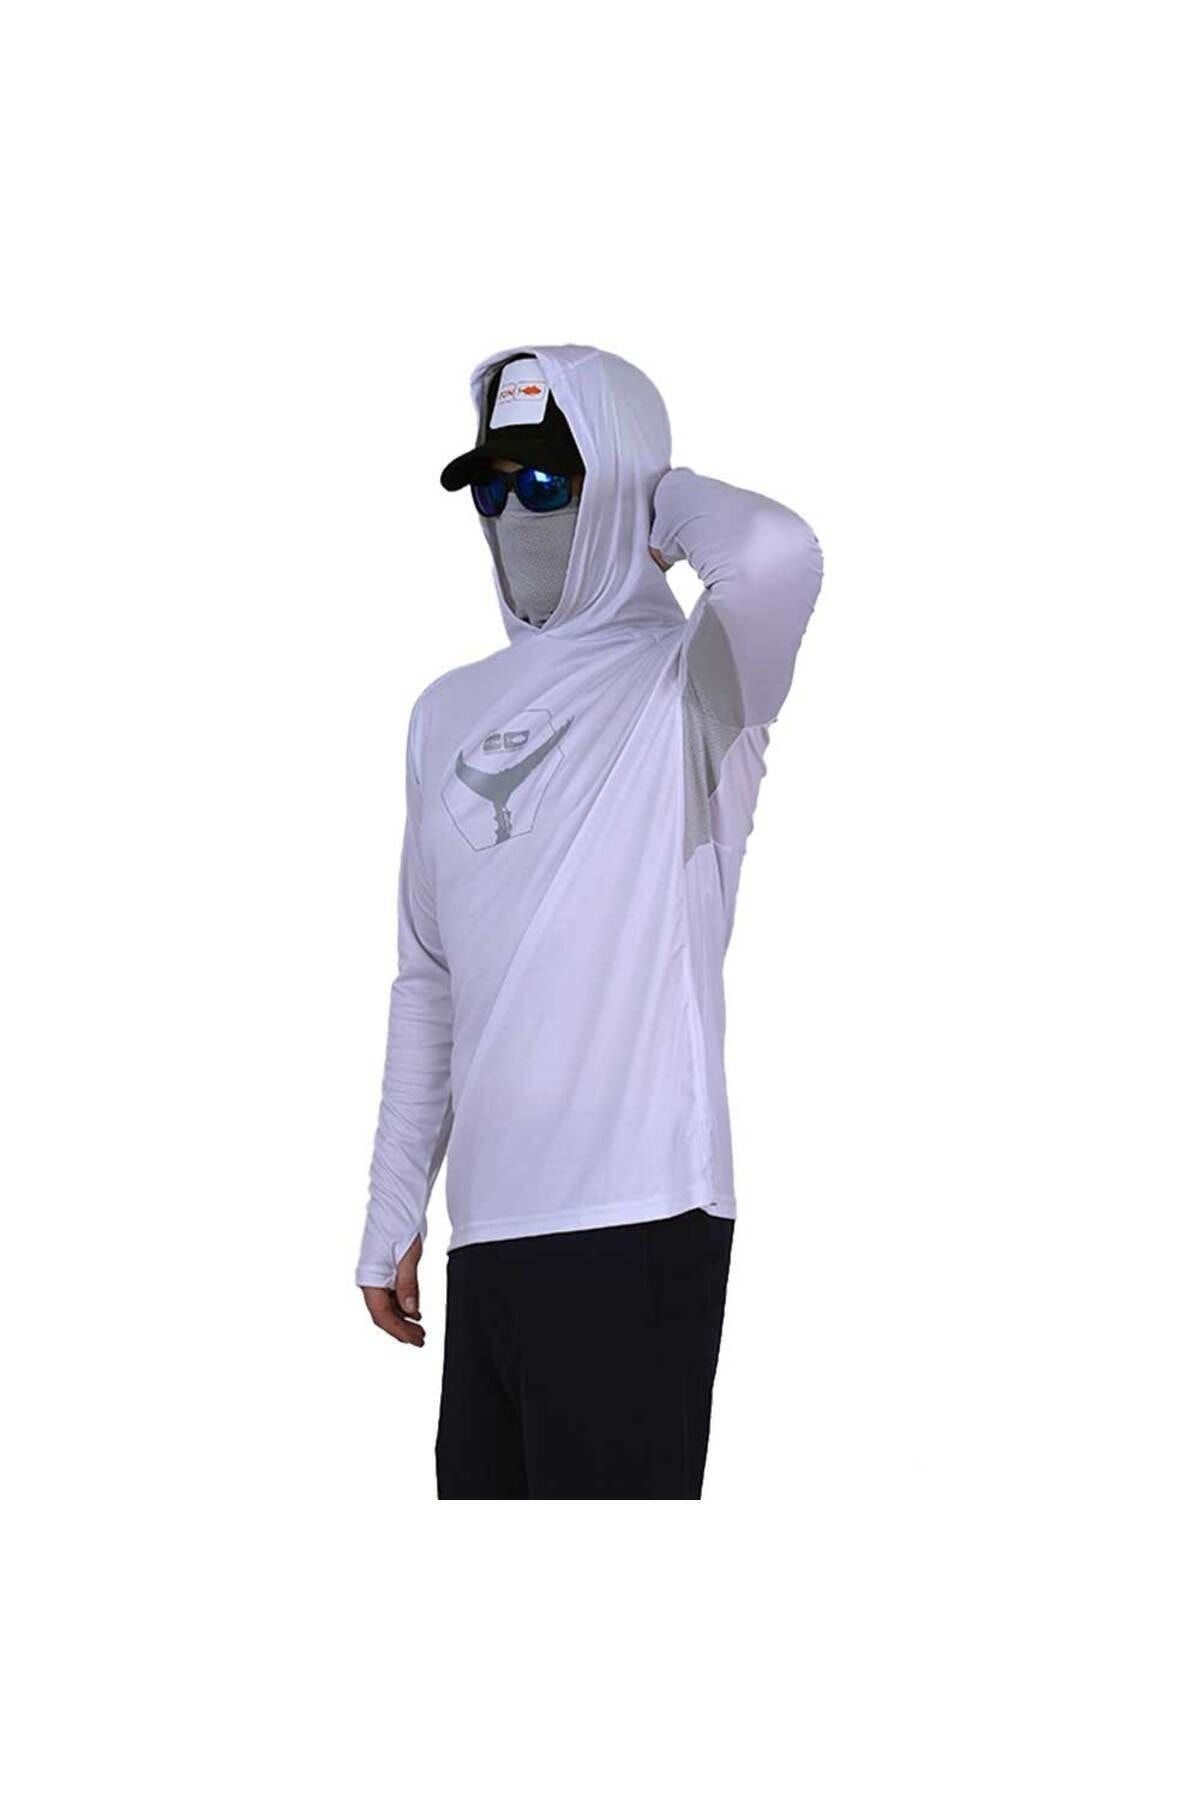 Fujin Pro Angler T-Shirt Dark White